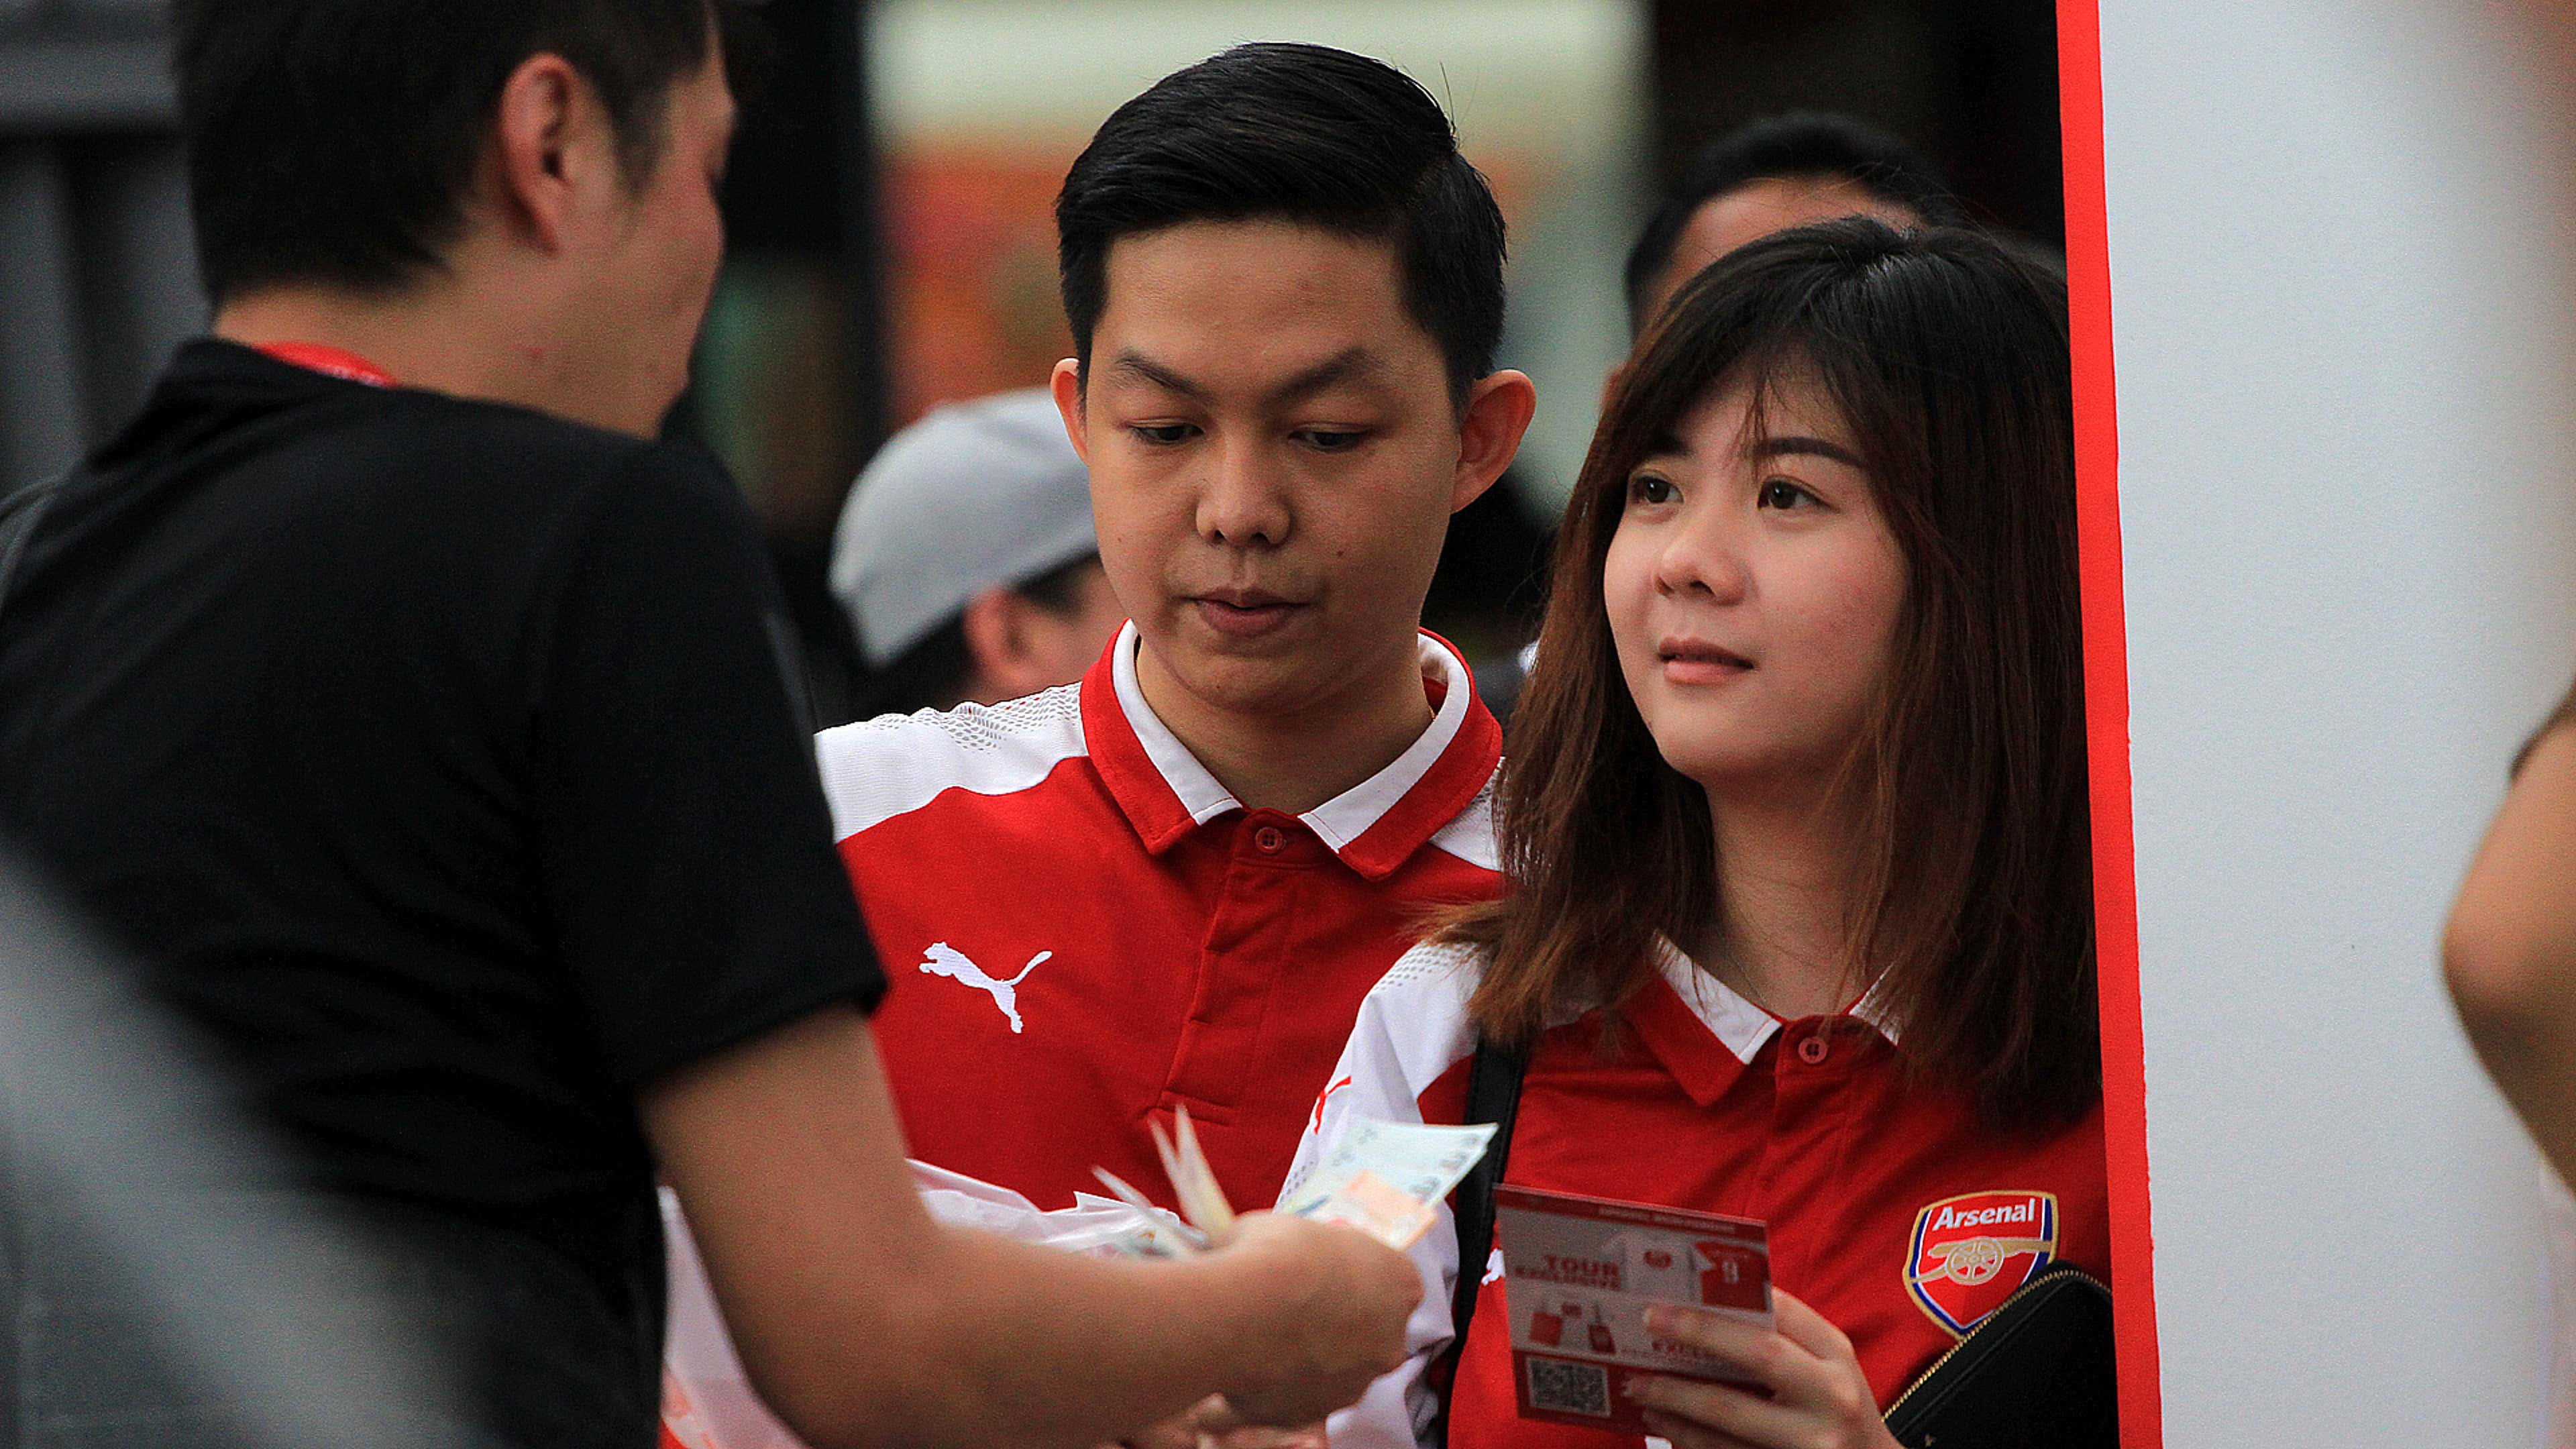 Arsenal Fans Singapore